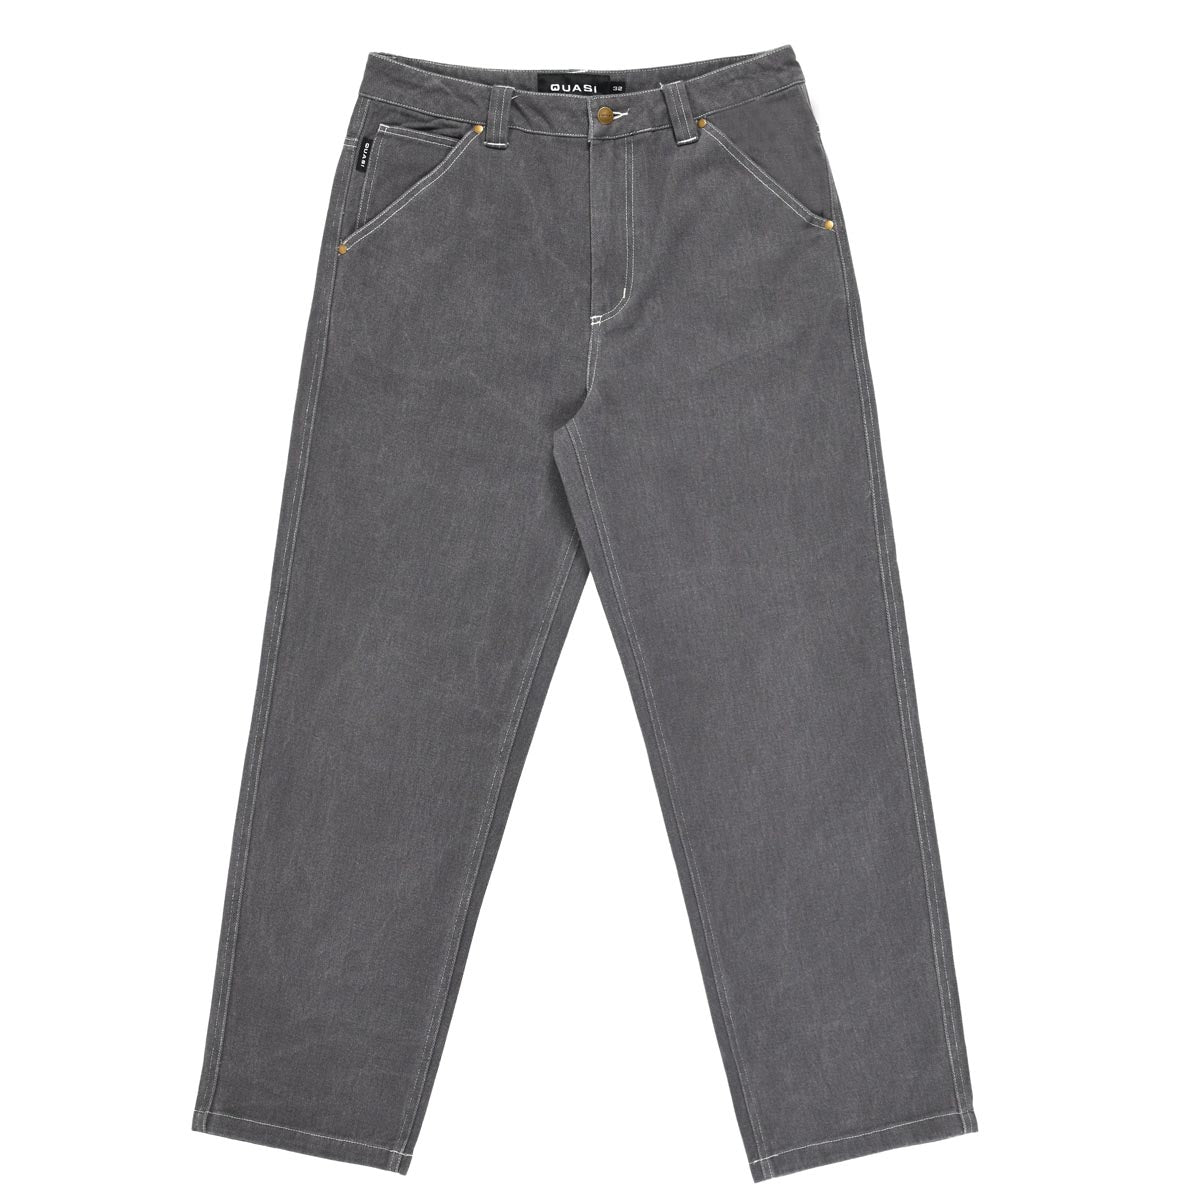 Quasi 102 Jeans - Washed Grey image 1